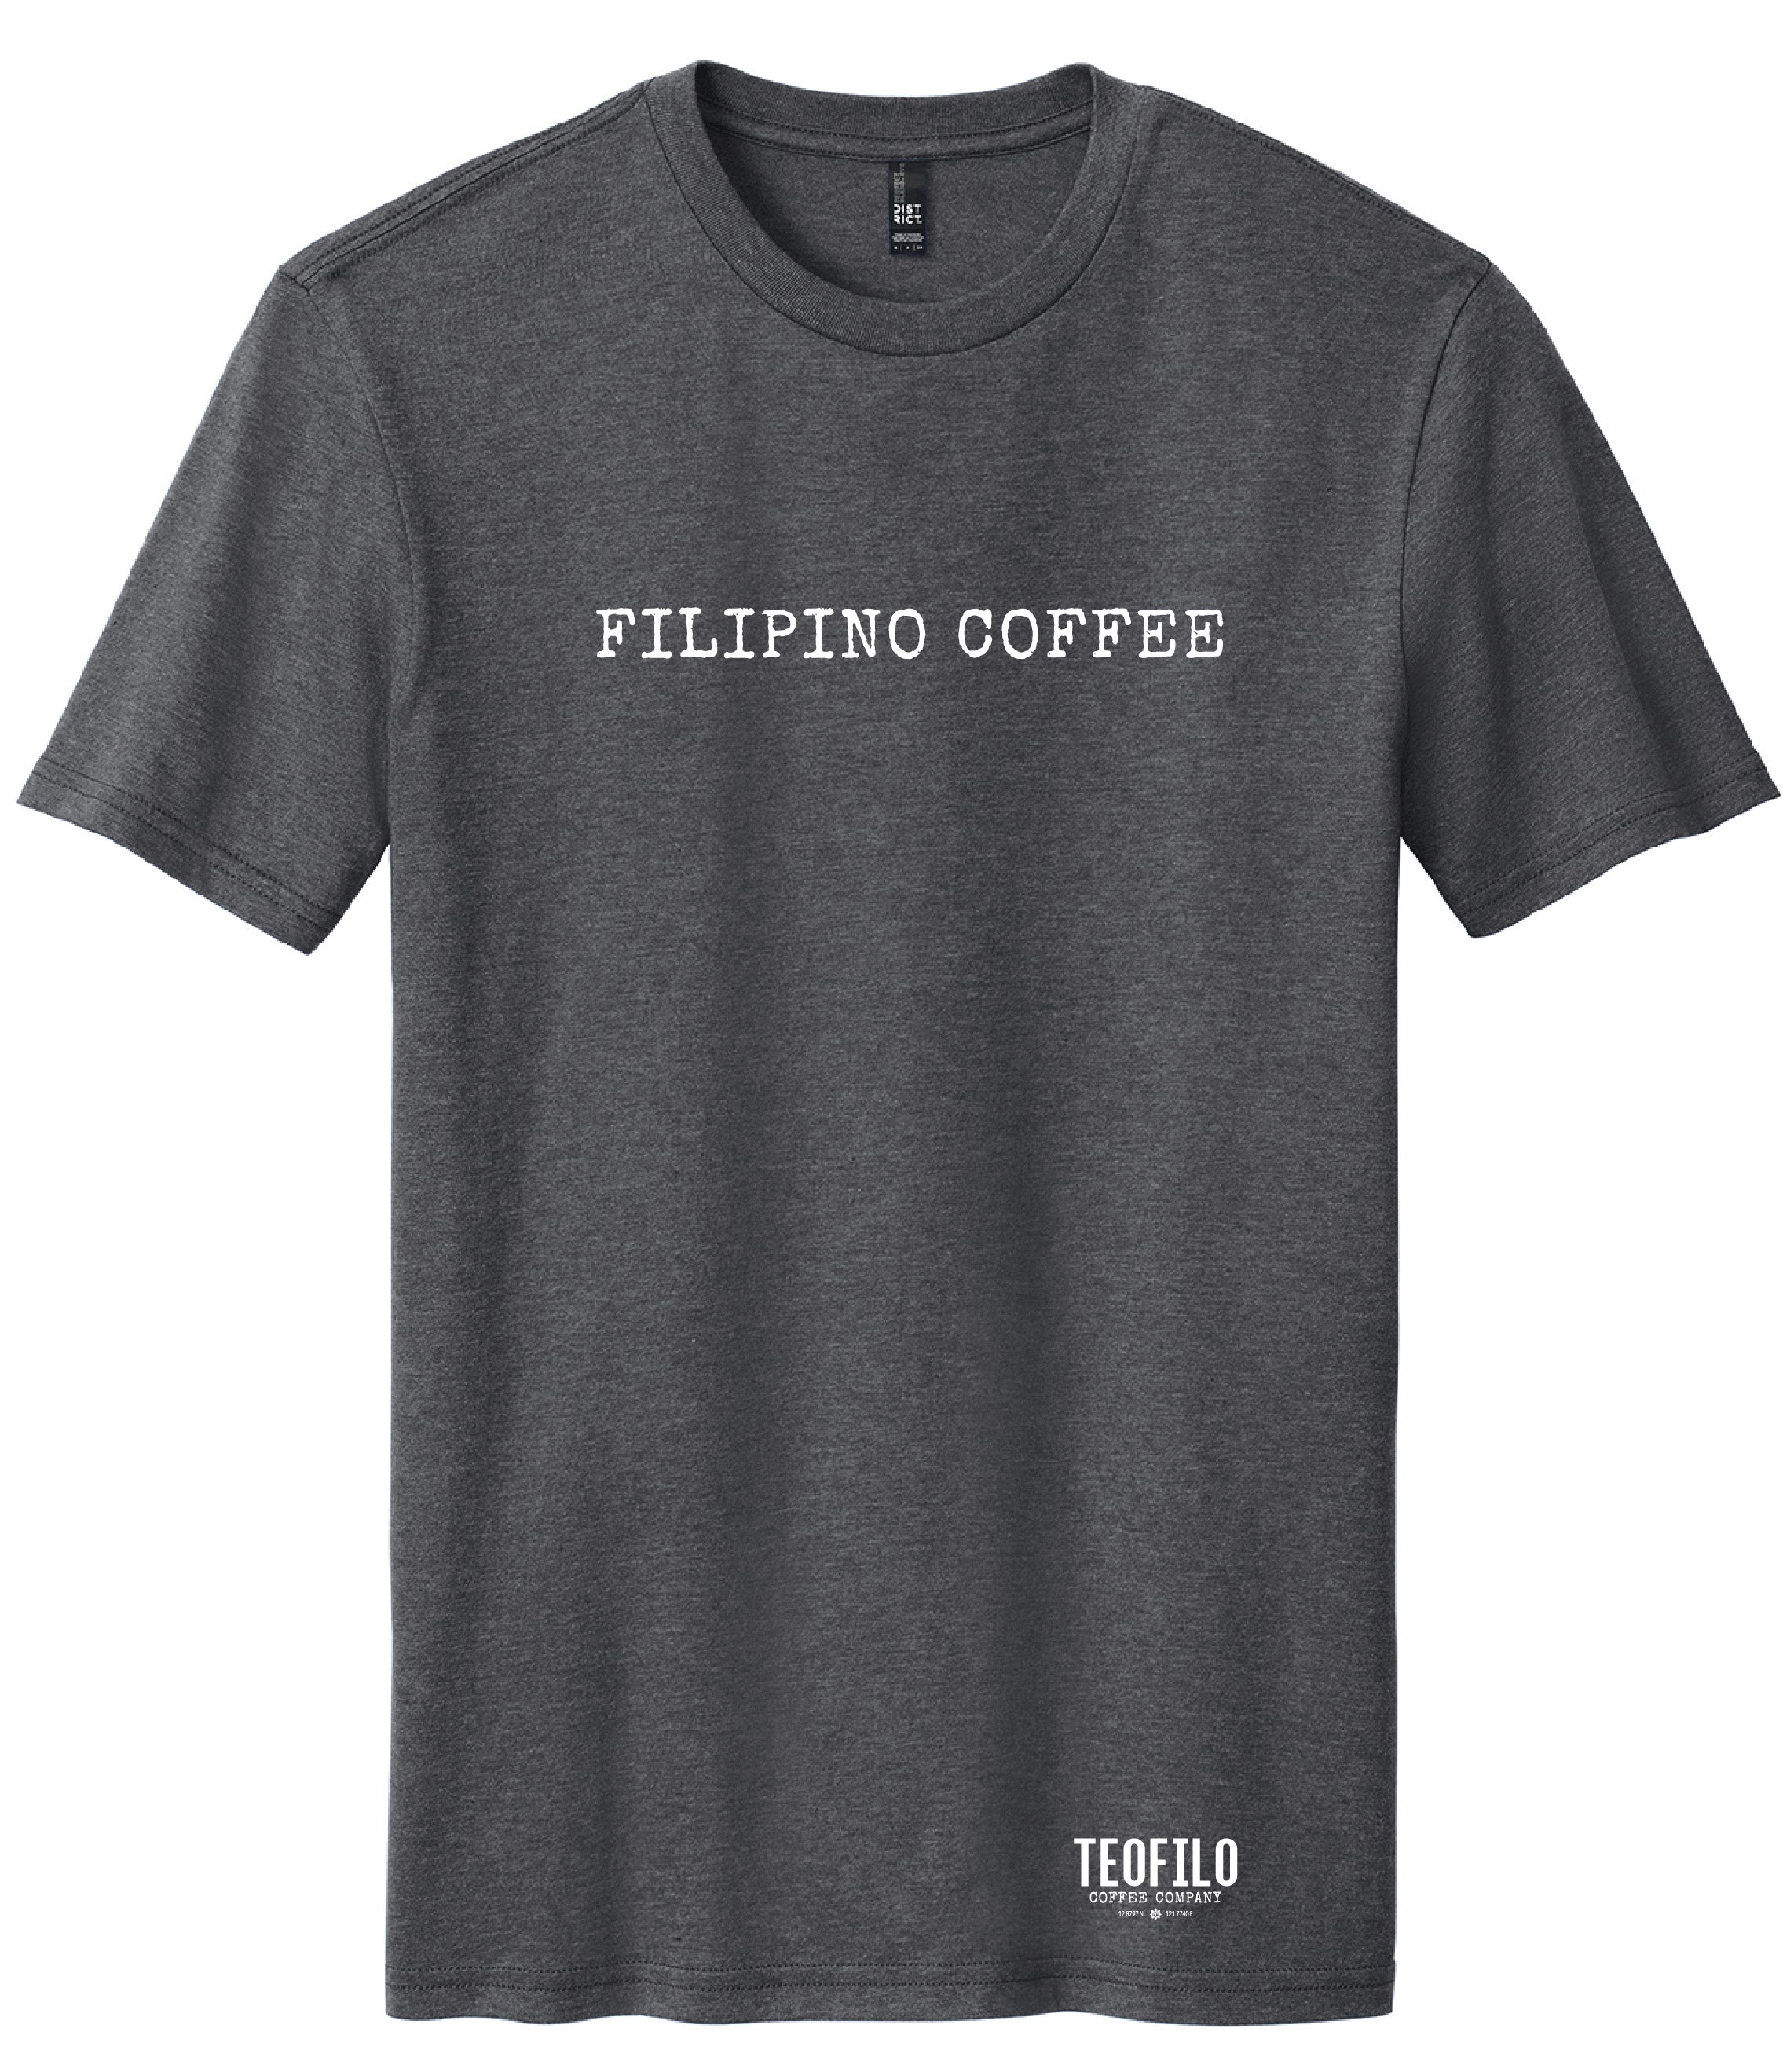 Teofilo Coffee - Shirt - ST24